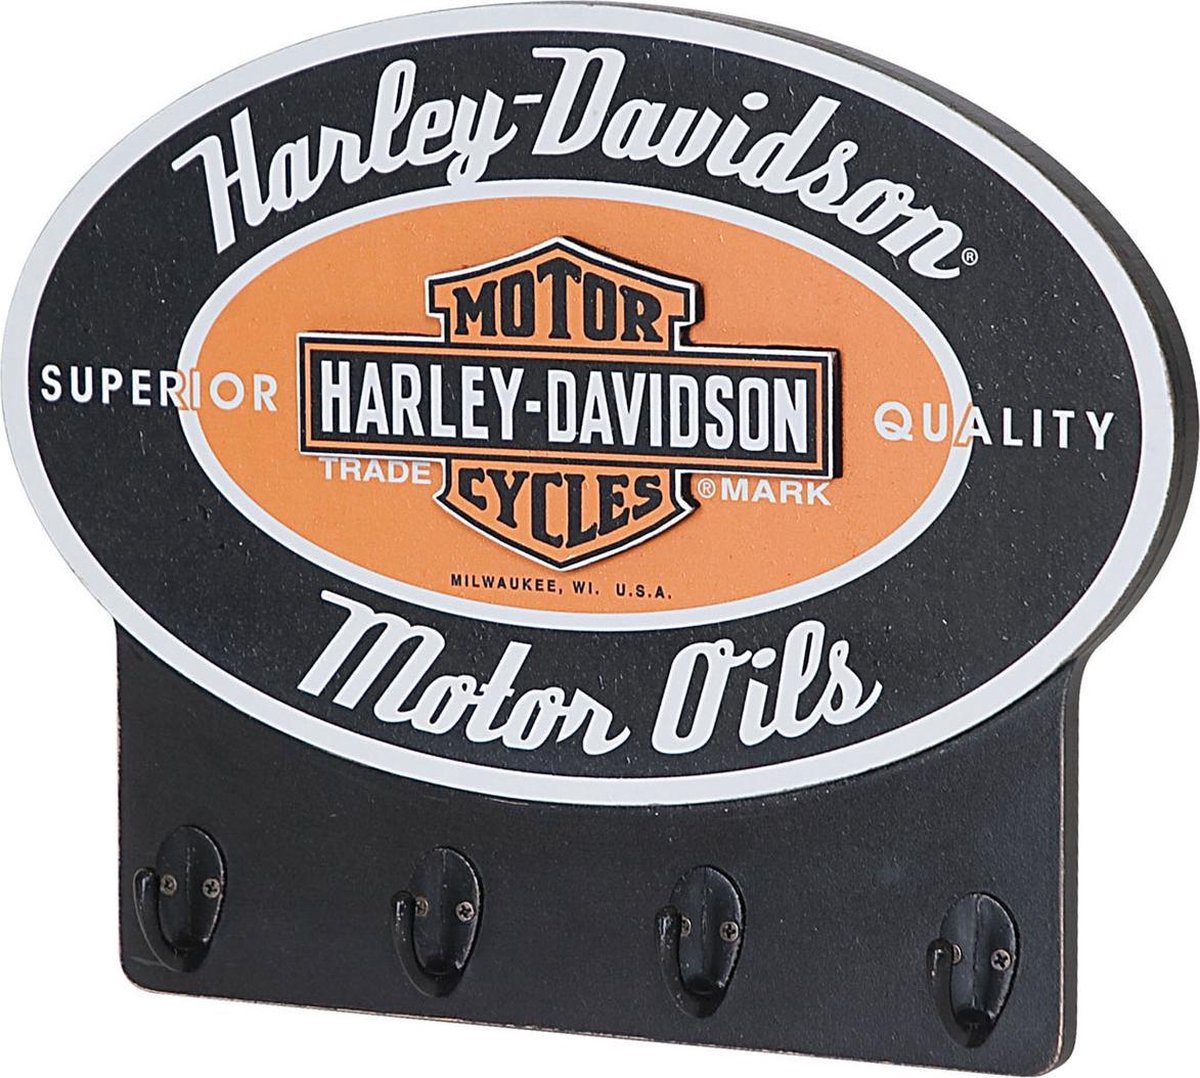 Porte-clés logo HARLEY DAVIDSON